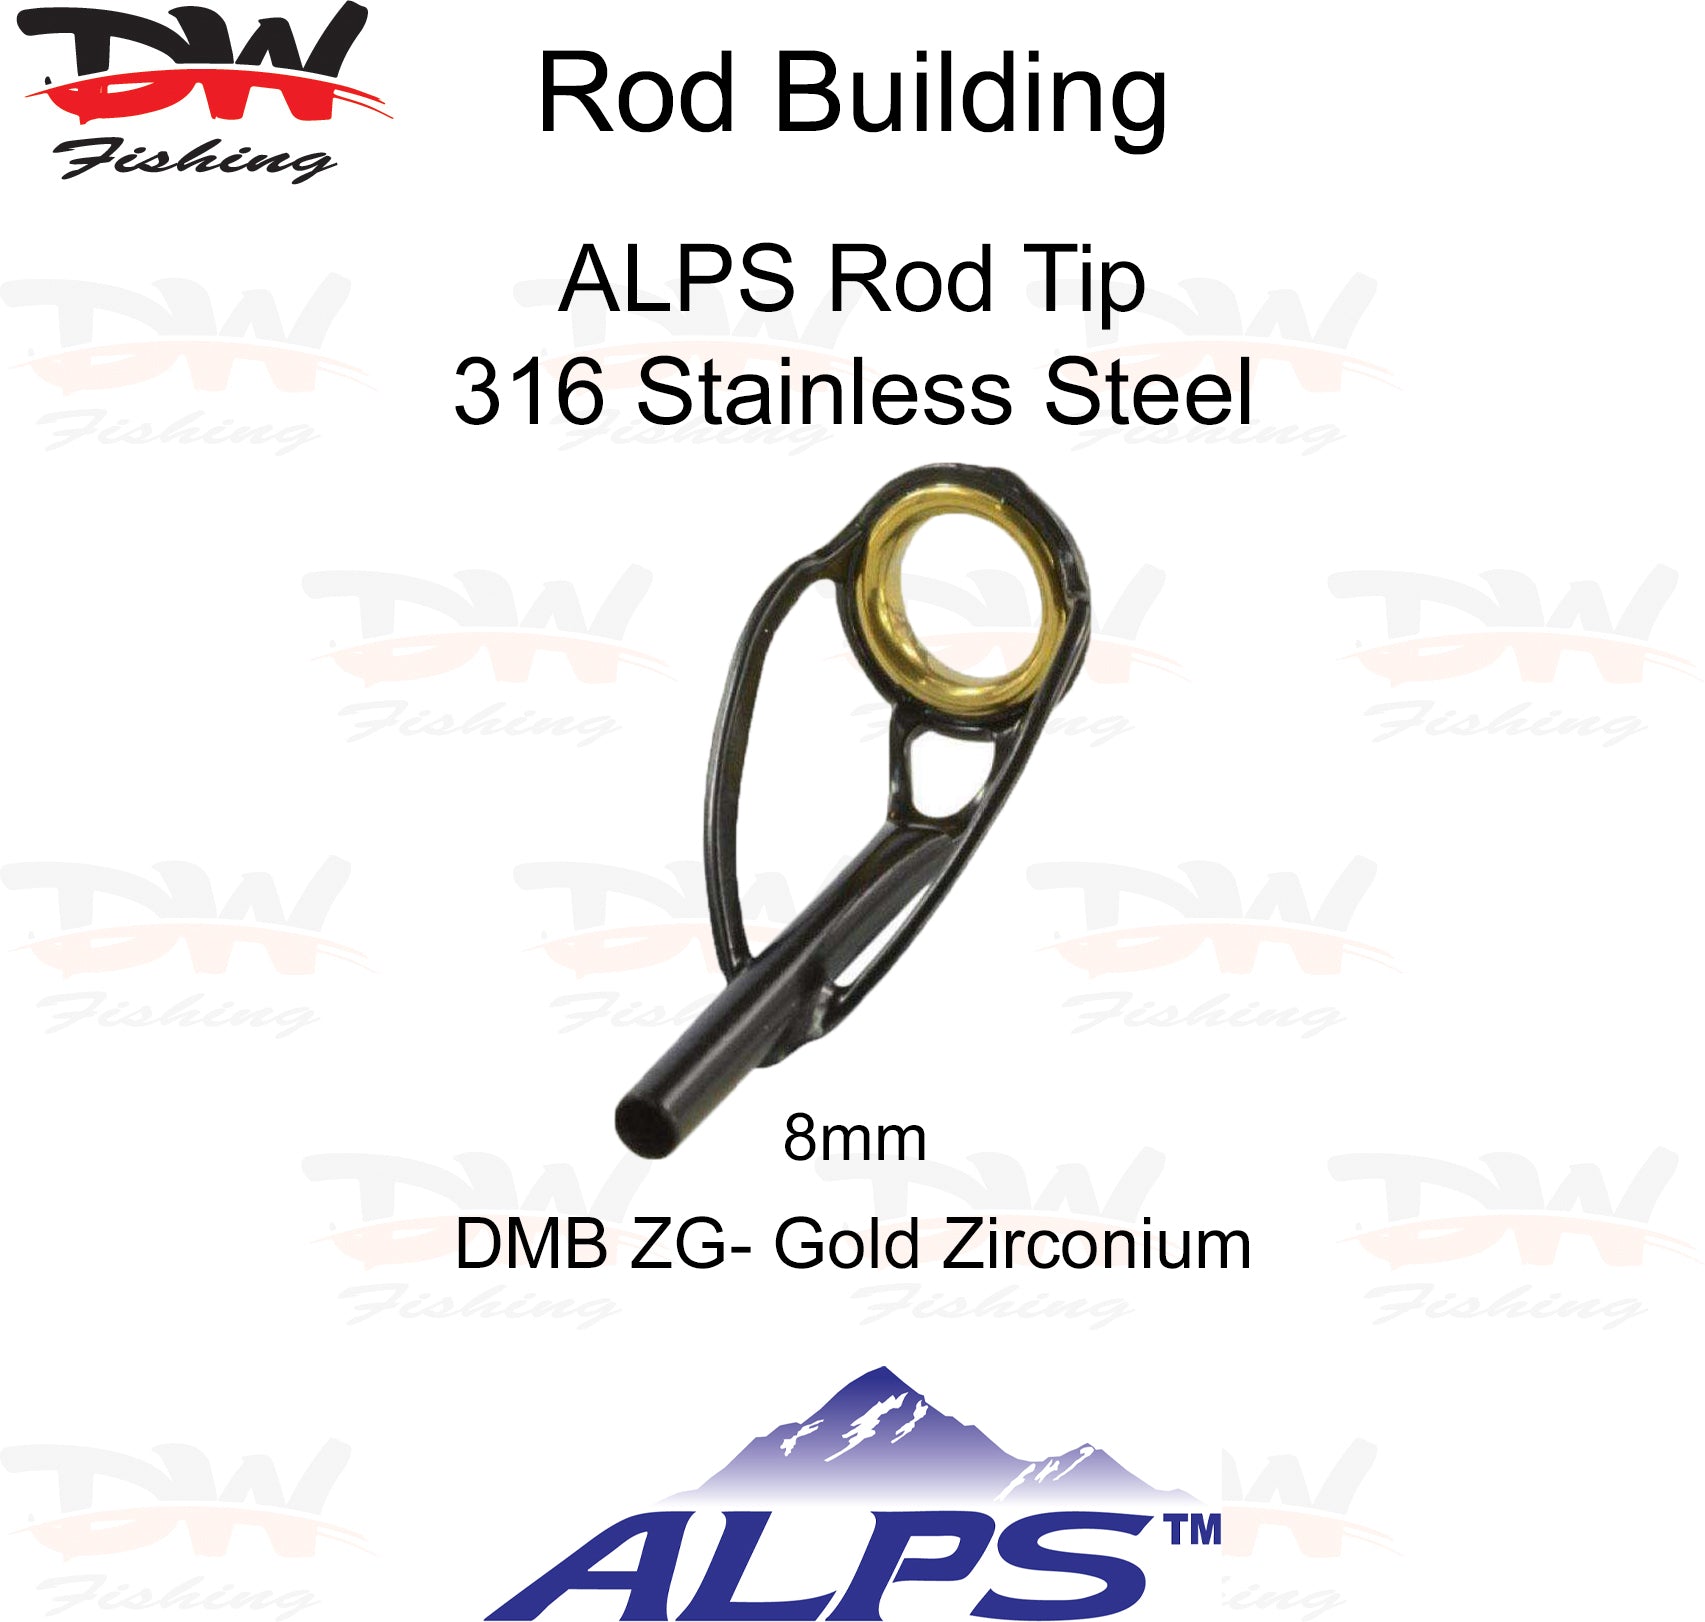 ALPS rod tip DMB-ZG Black frame with gold zirconium ring size 8 rod tip